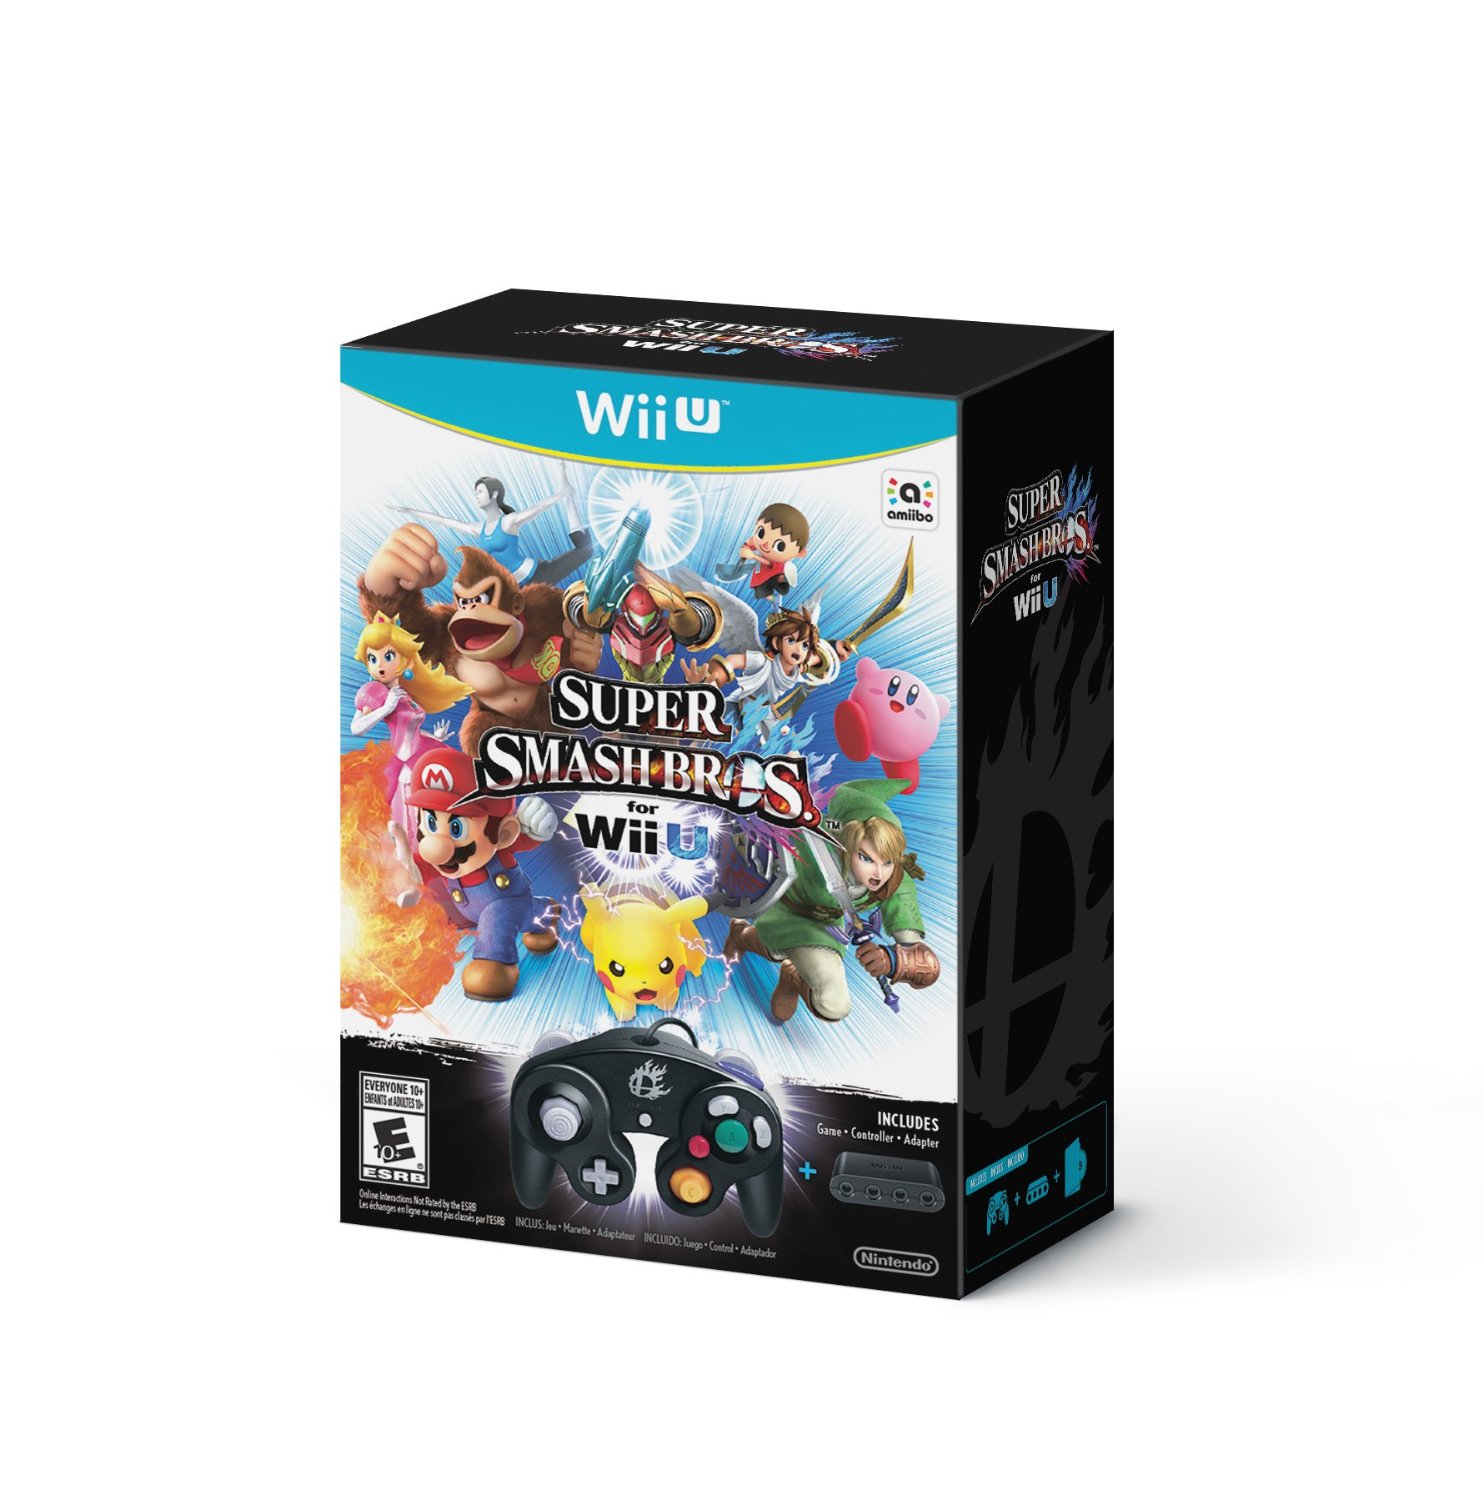 Le bundle Super Smash Bros. for Wii U en image !